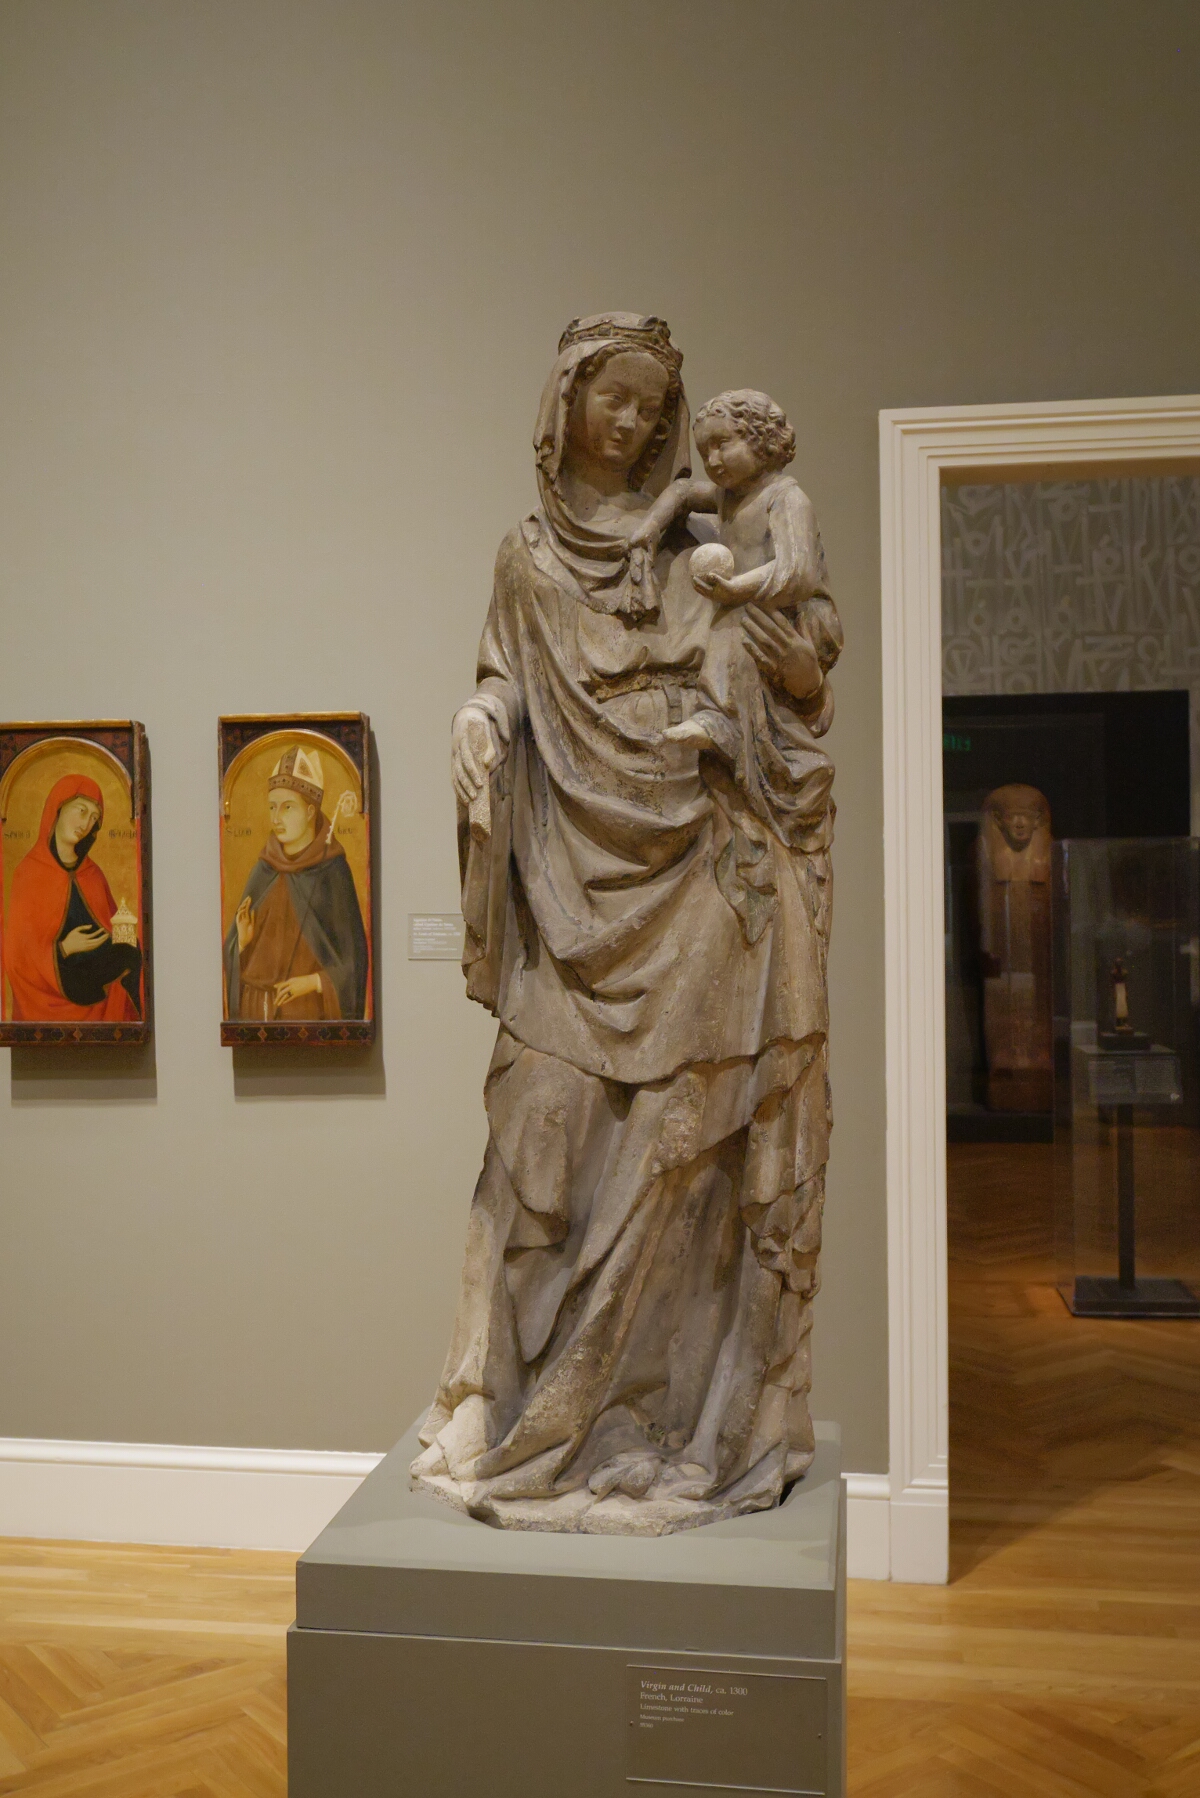 This Madonna with child is from thirteenth-century Lorraine.